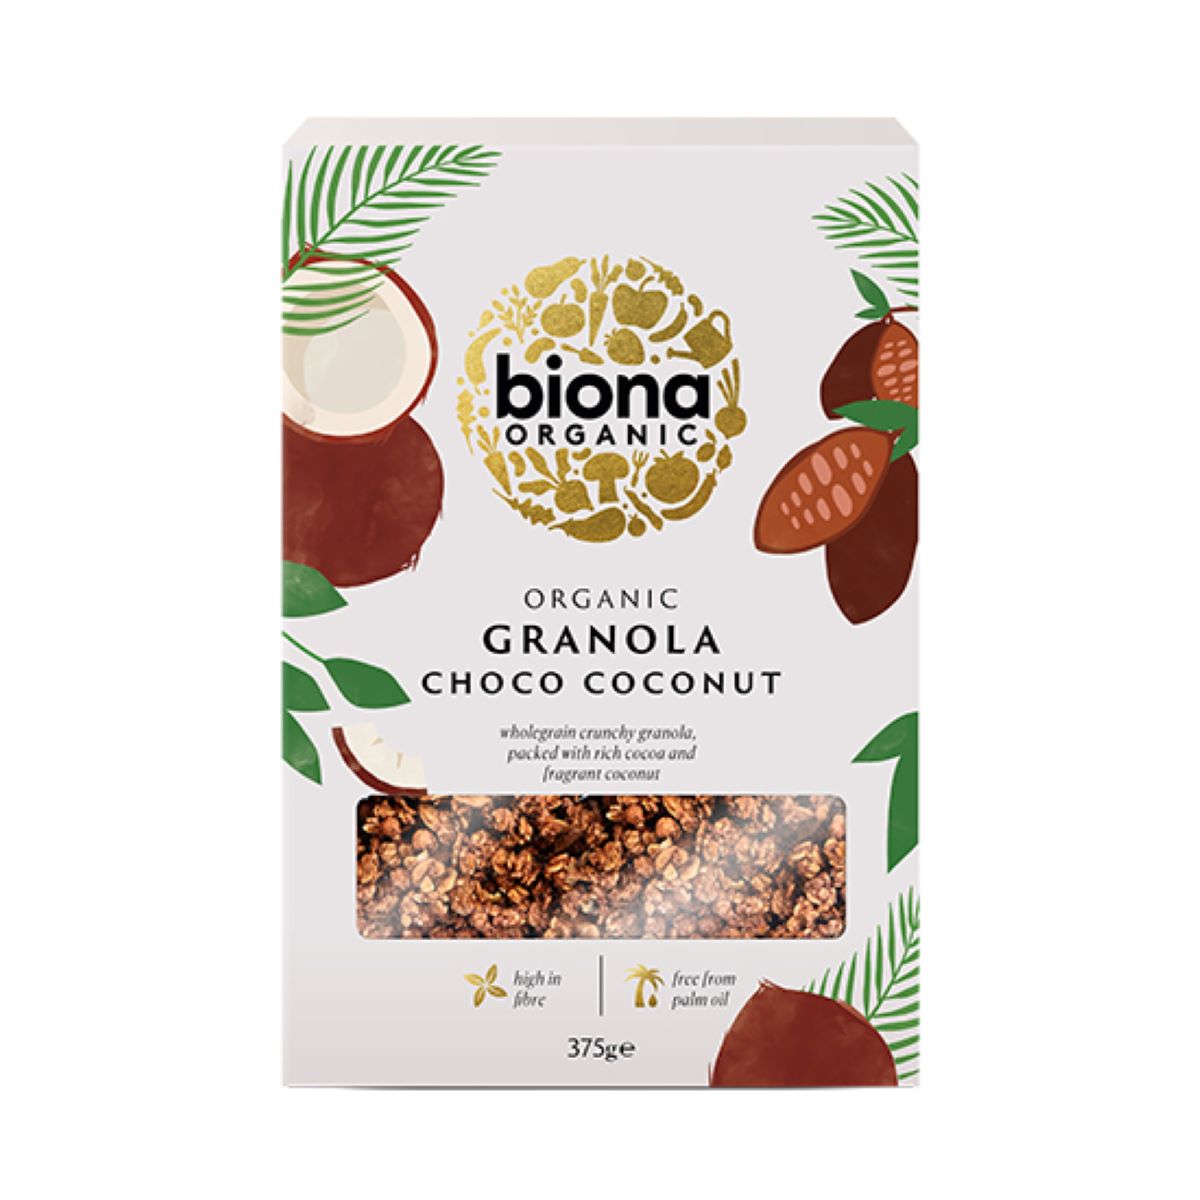 Biona Organic Granola Choco Coconut 375g